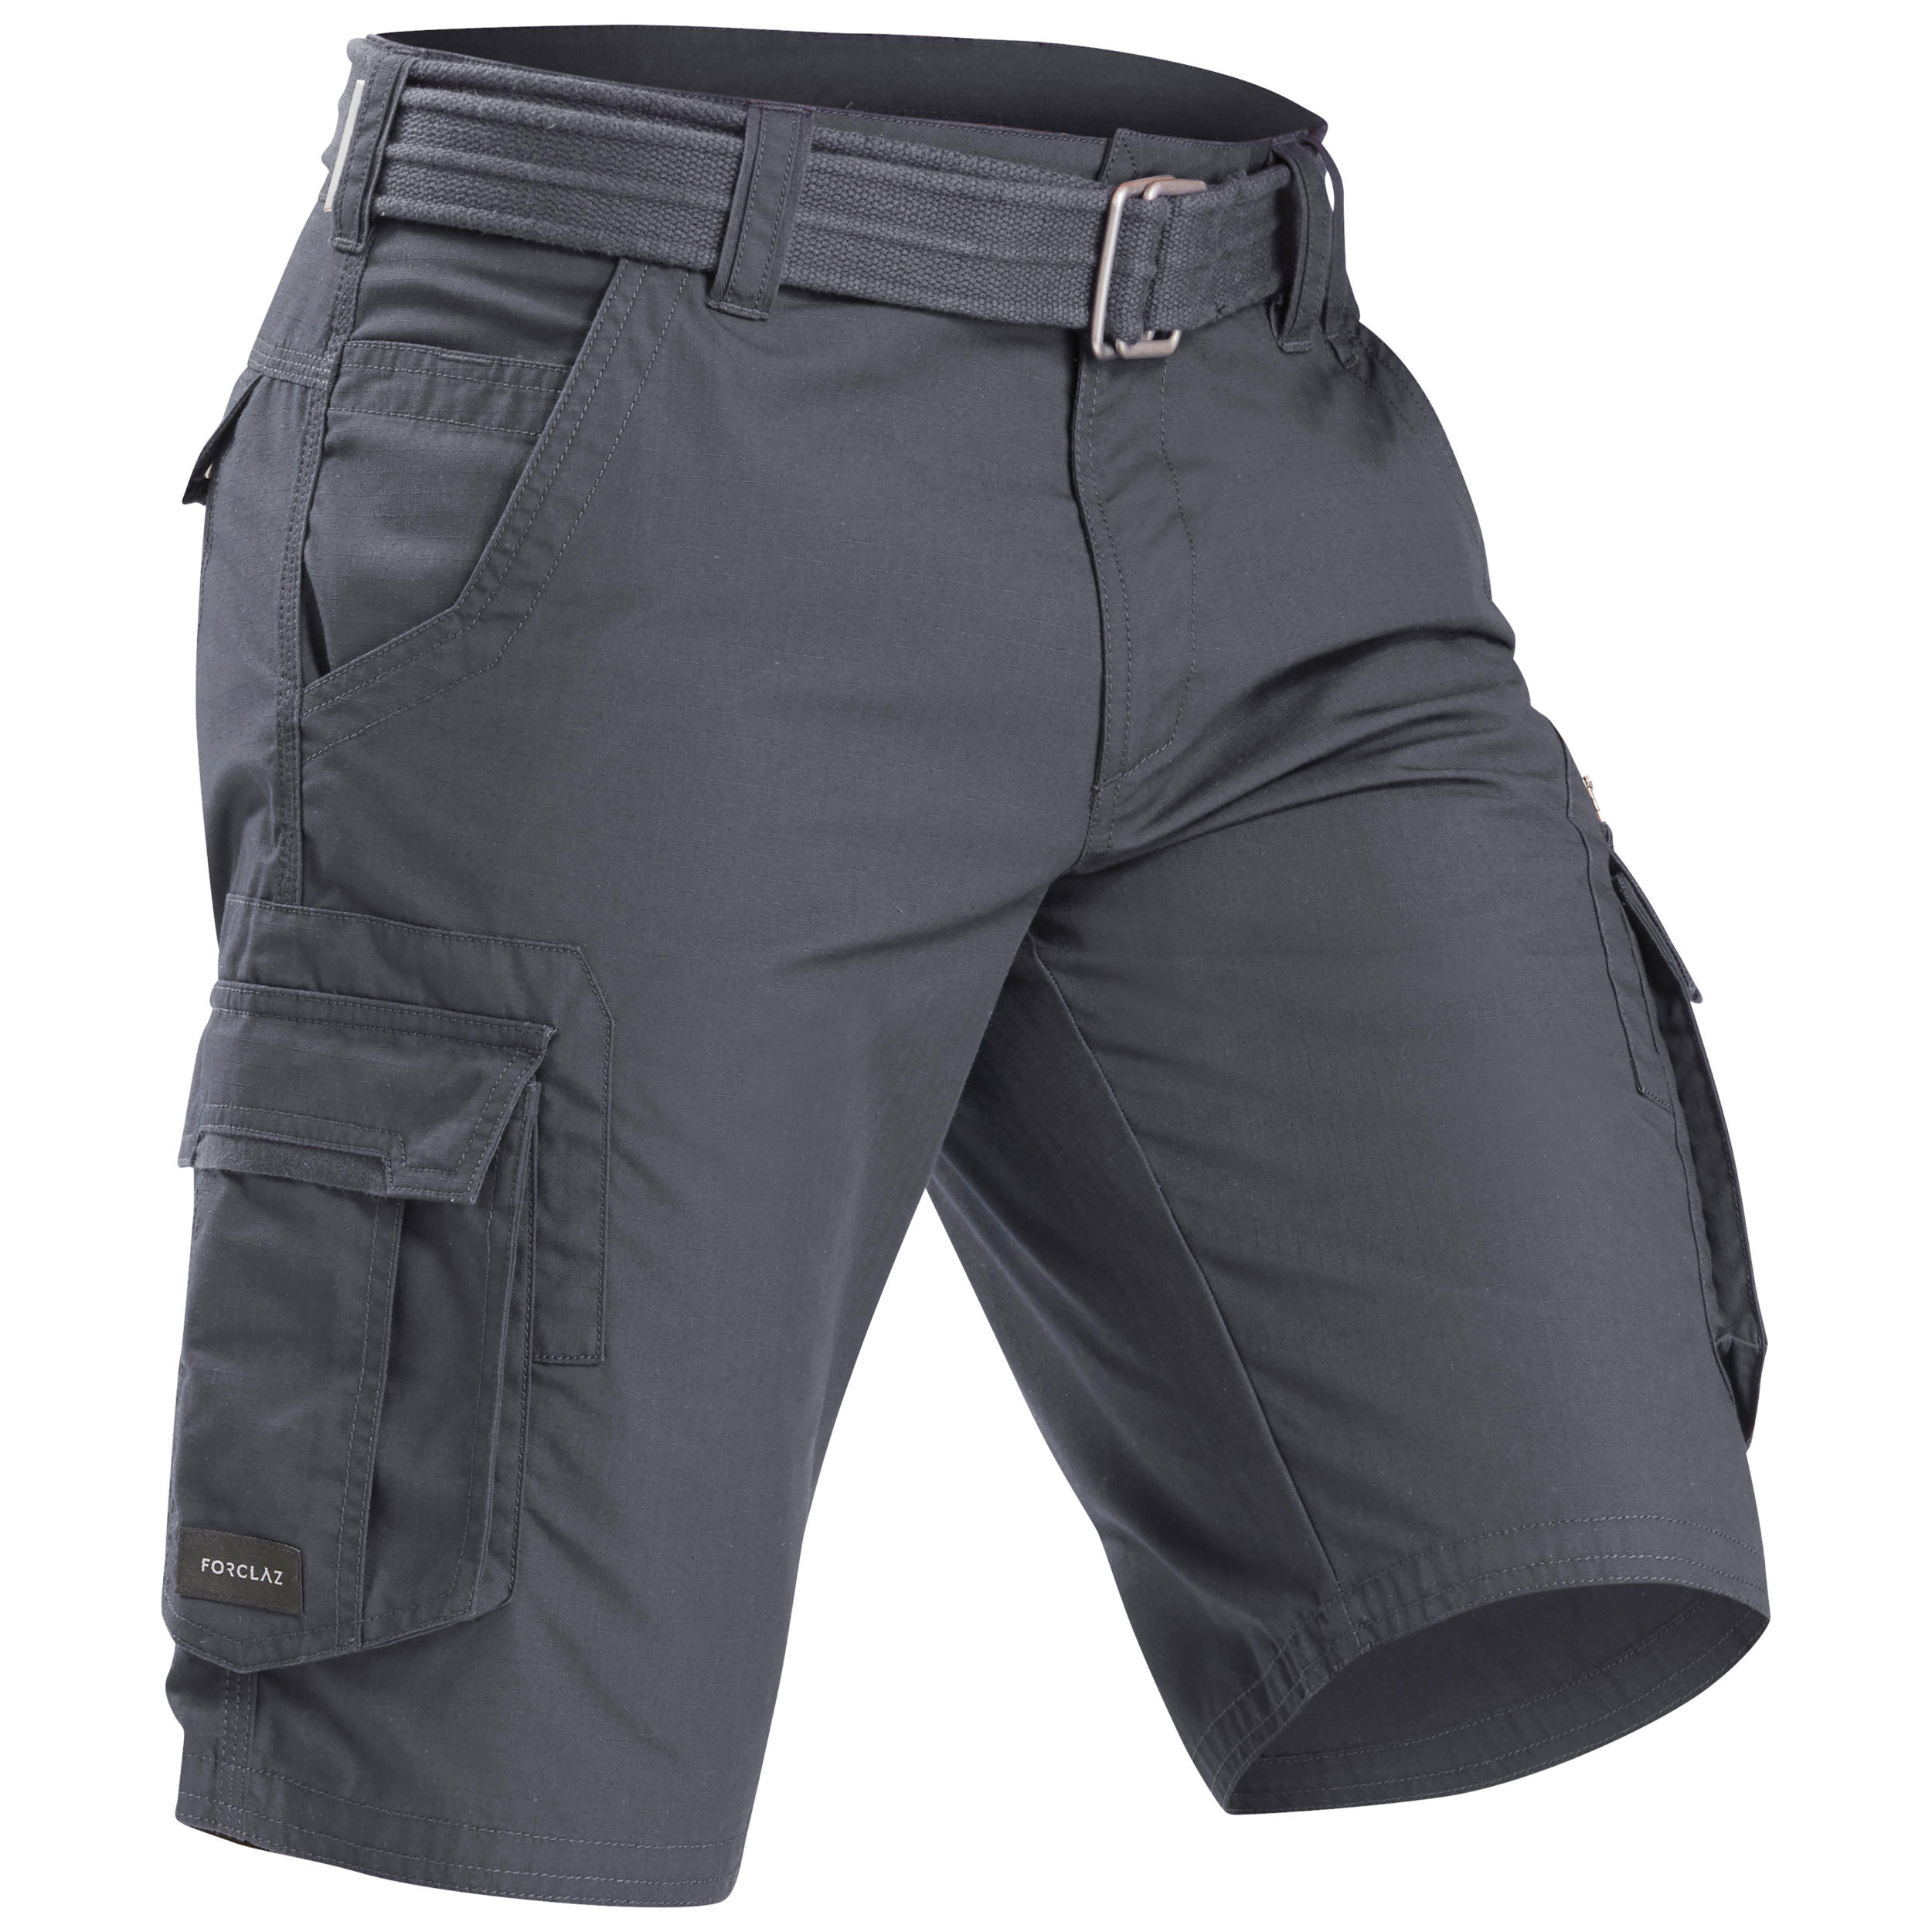 ChaseOverIN Men Multi pocket cargo shorts Half pants